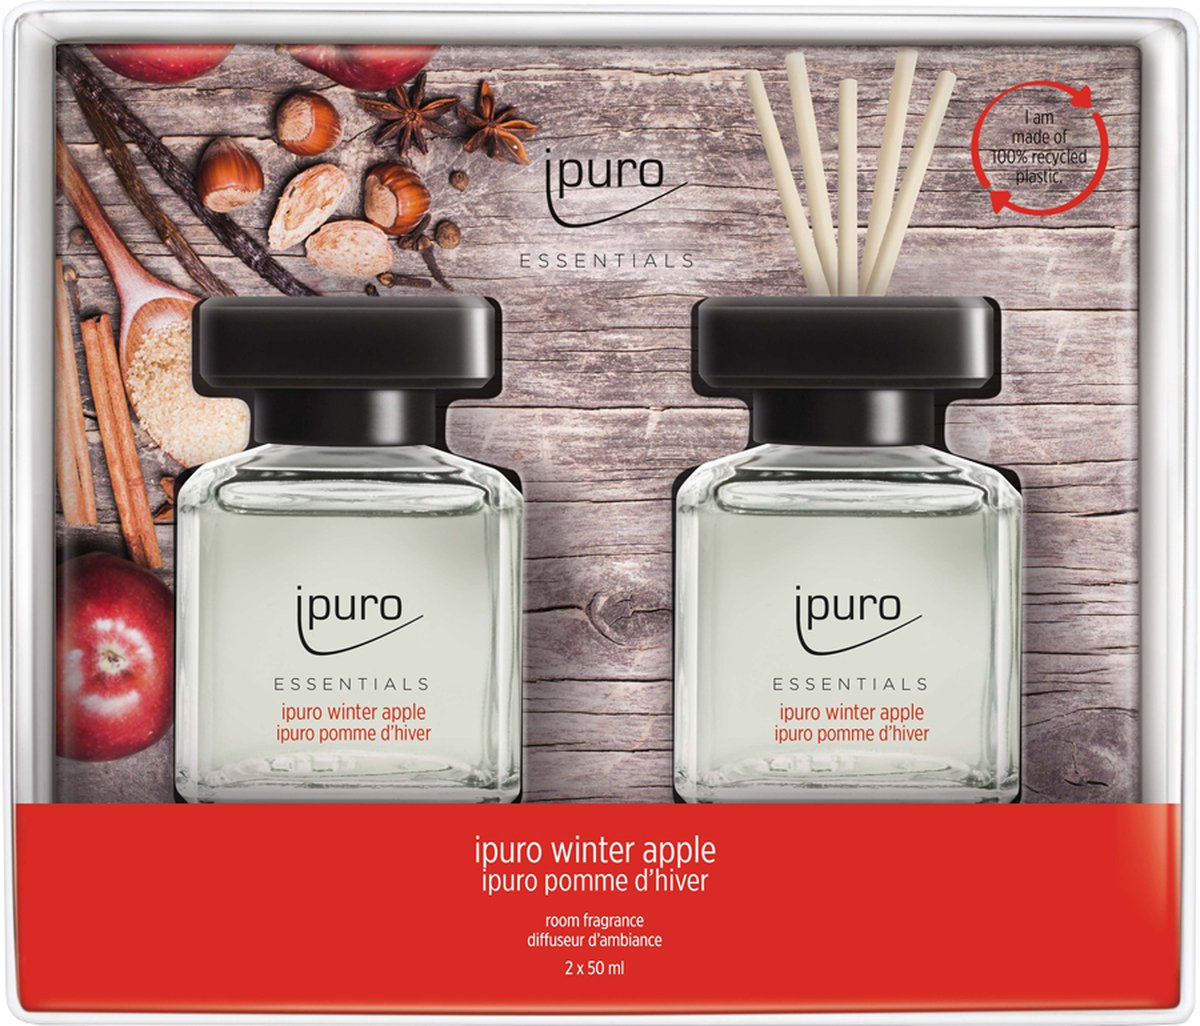 Bâtonnets parfumés Ipuro Essentials Soft Vanilla 100 ml